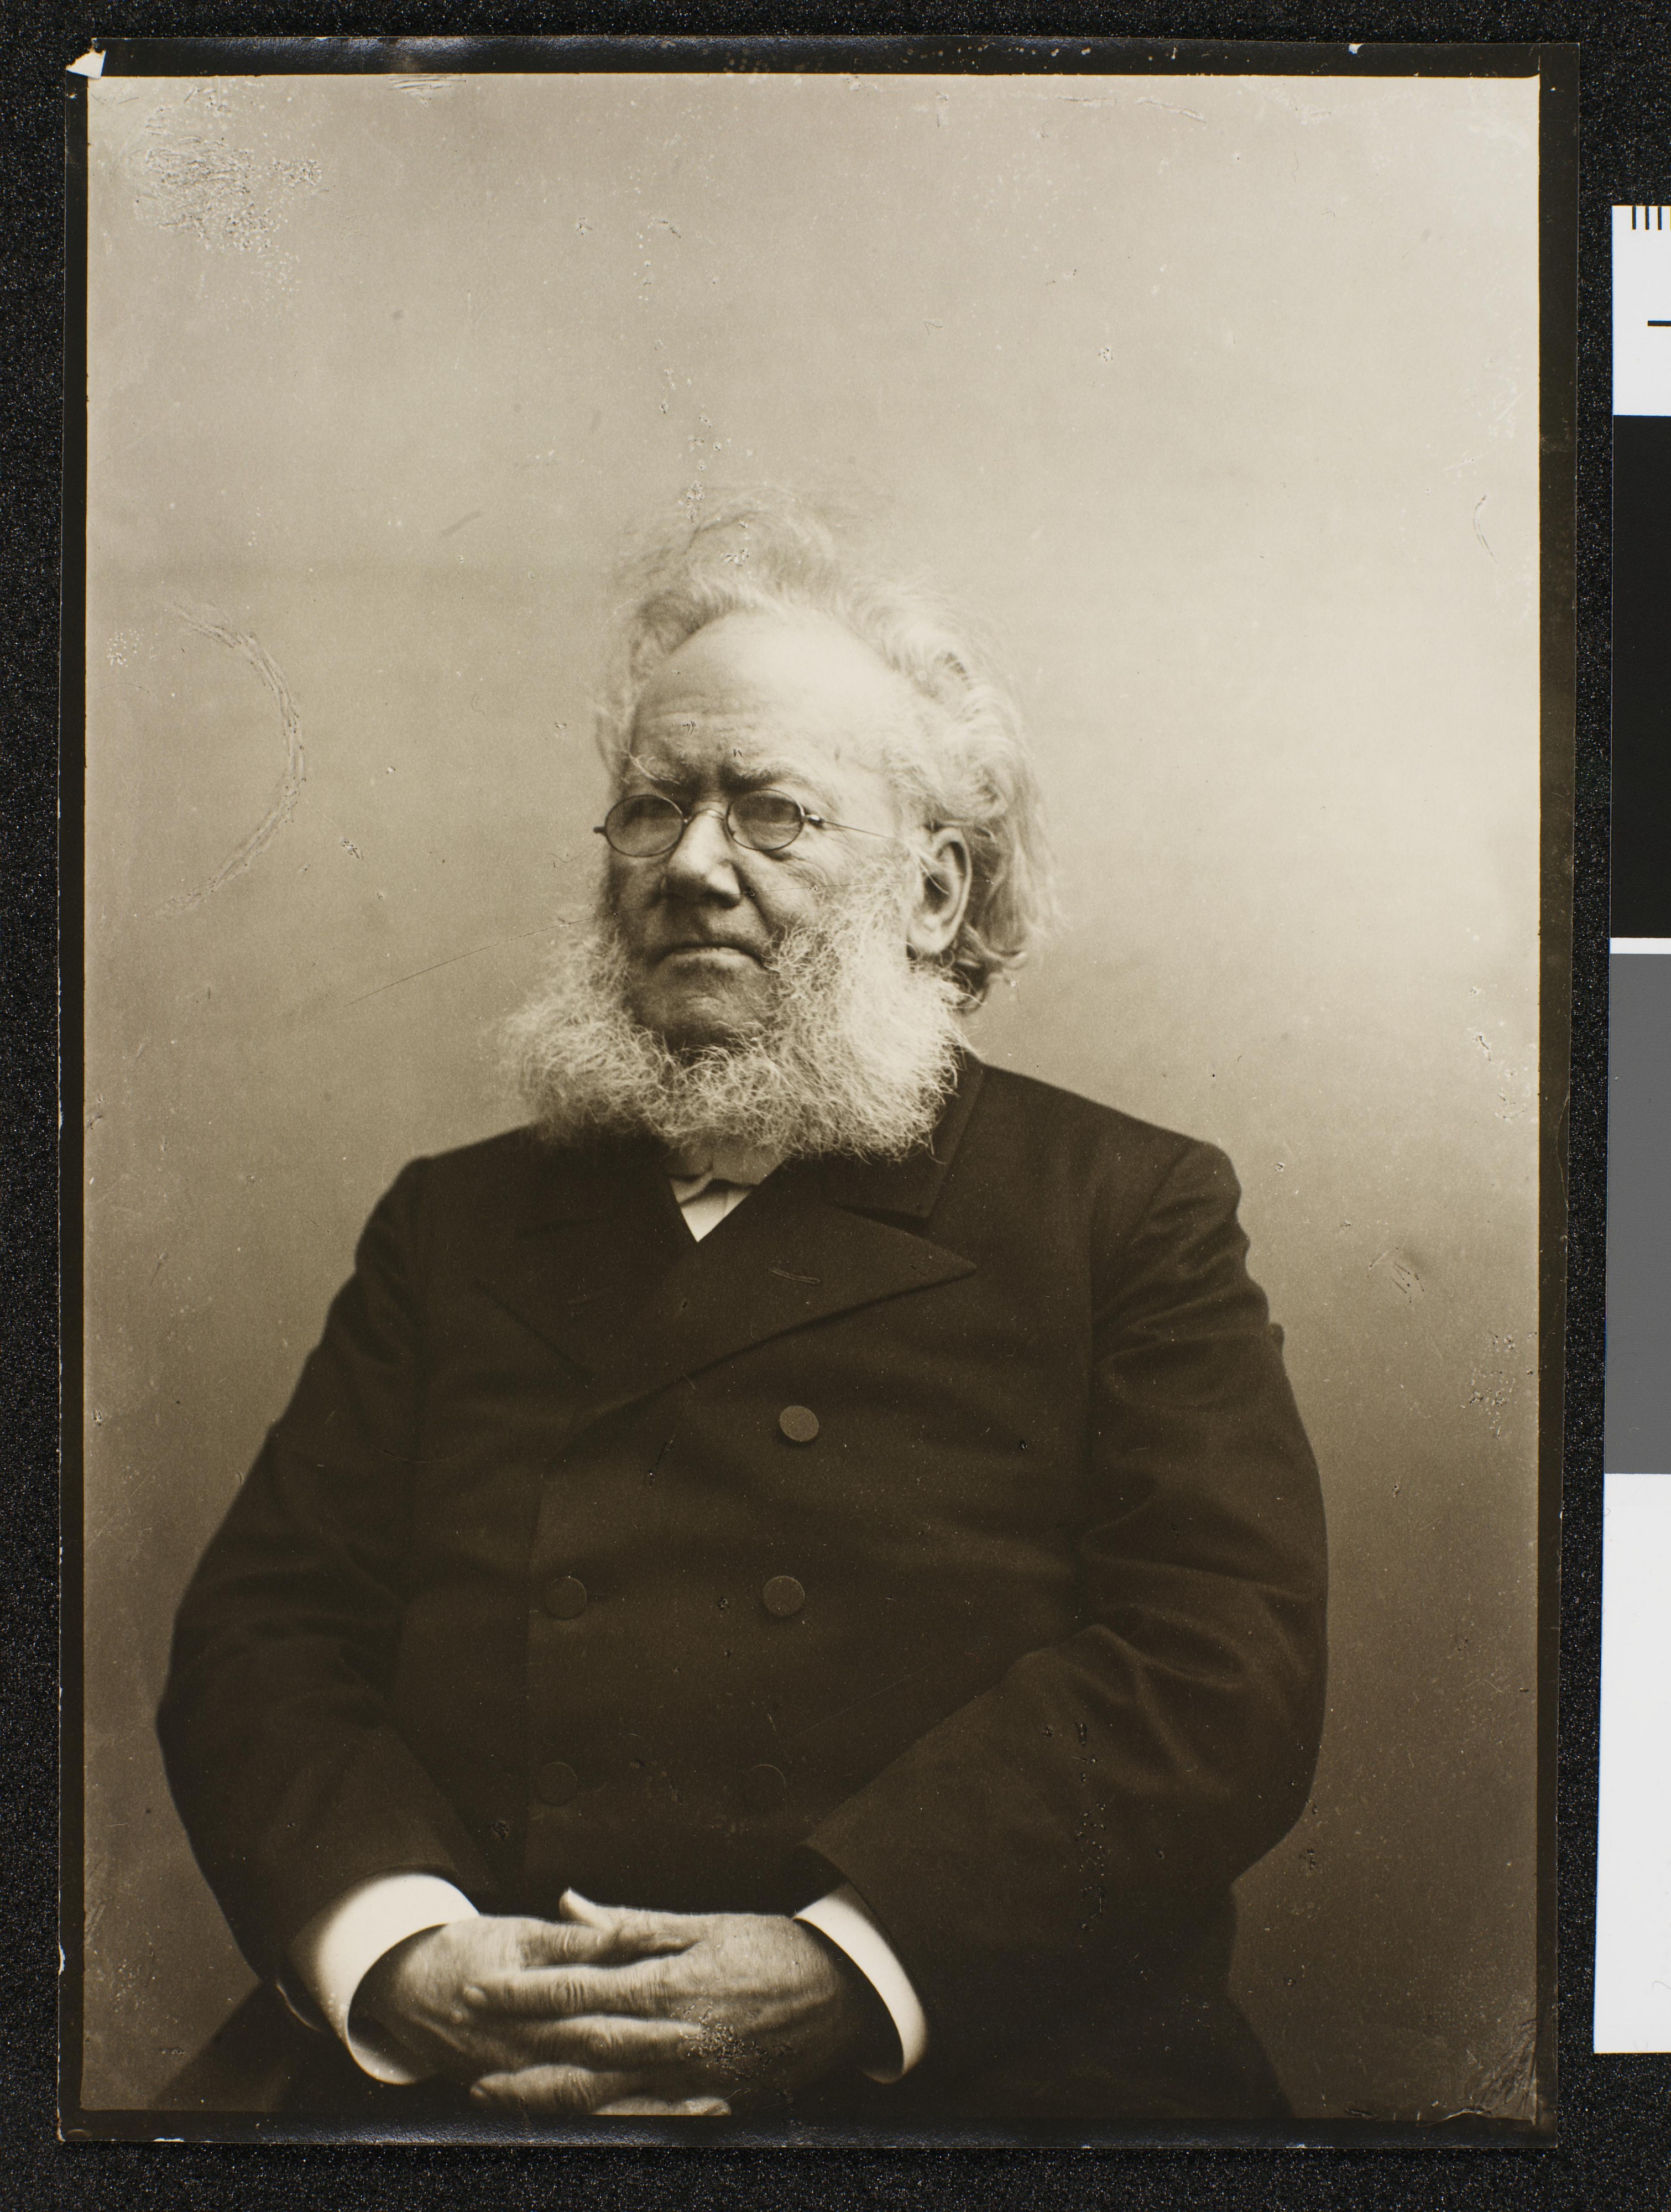 Portrett av Henrik Ibsen, Kristiania 1898 - no-nb digifoto 20160226 00046 bldsa ib1a2007